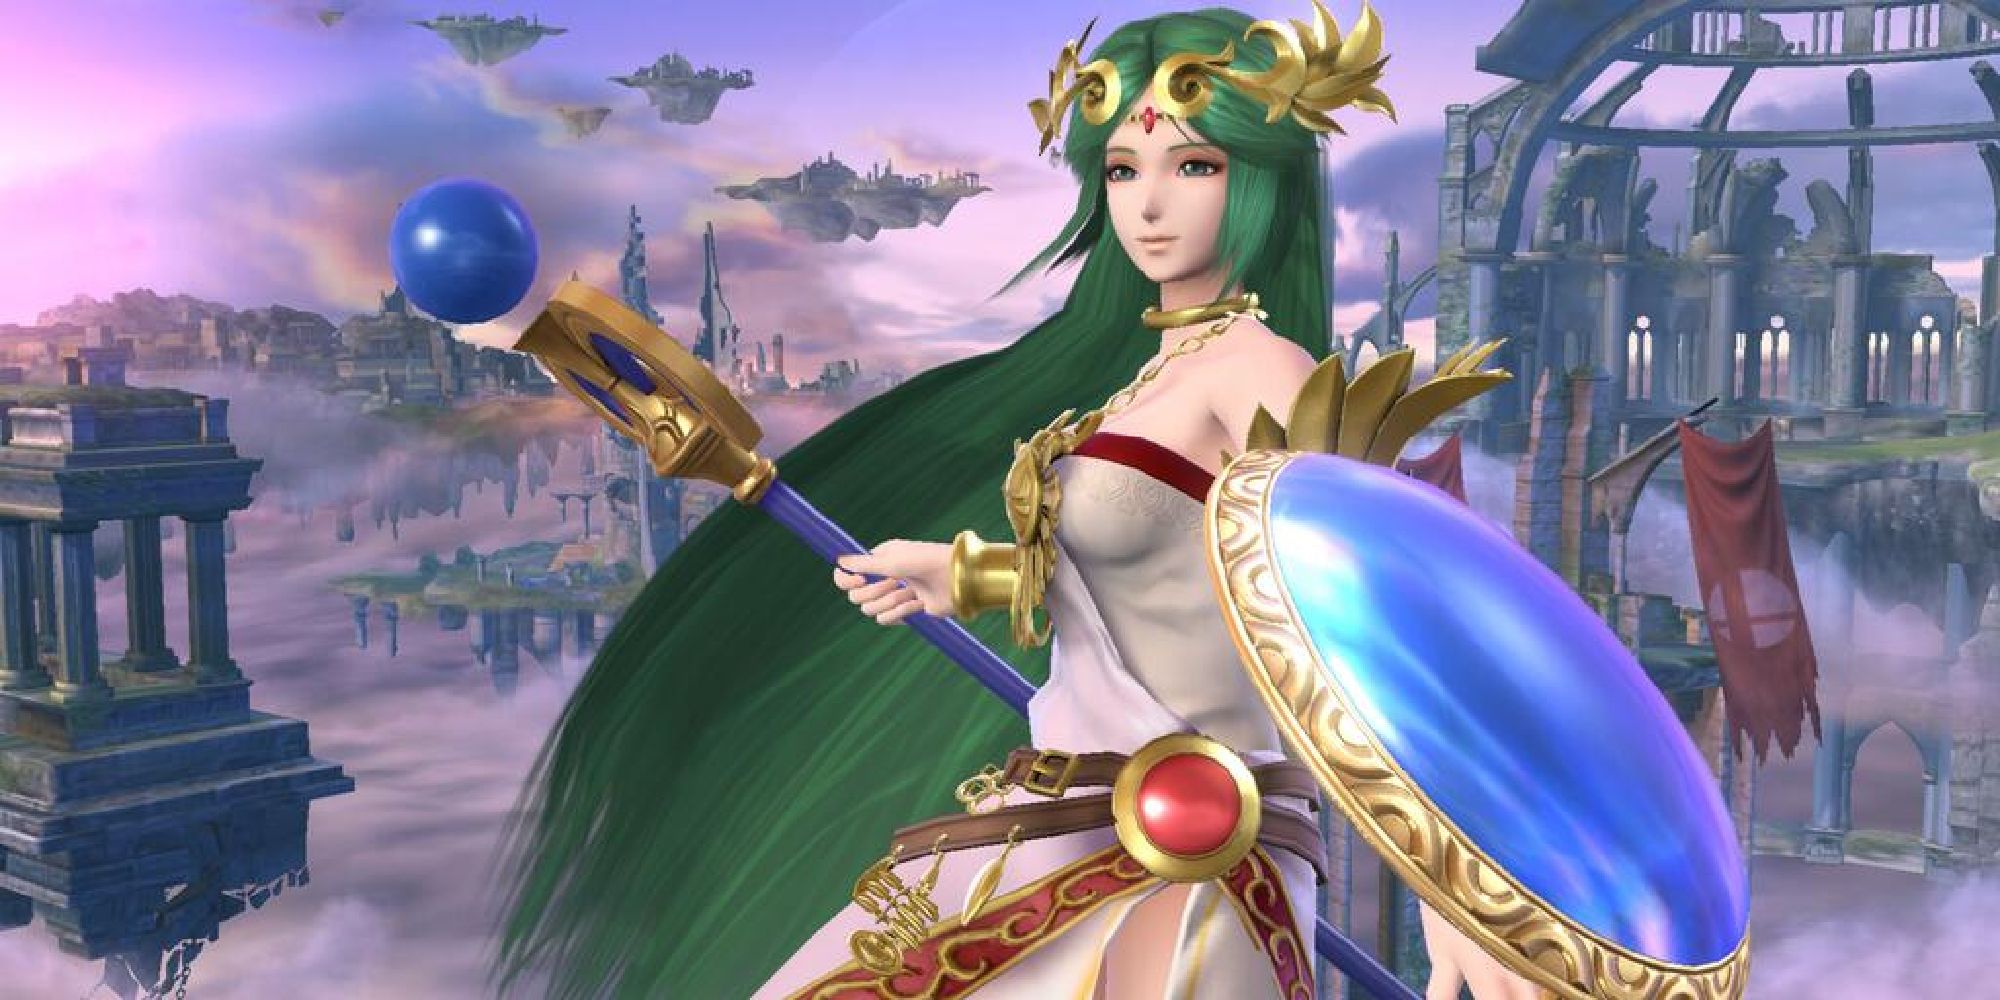 Palutena wielding her magic staff in Super Smash Bros for Wii U